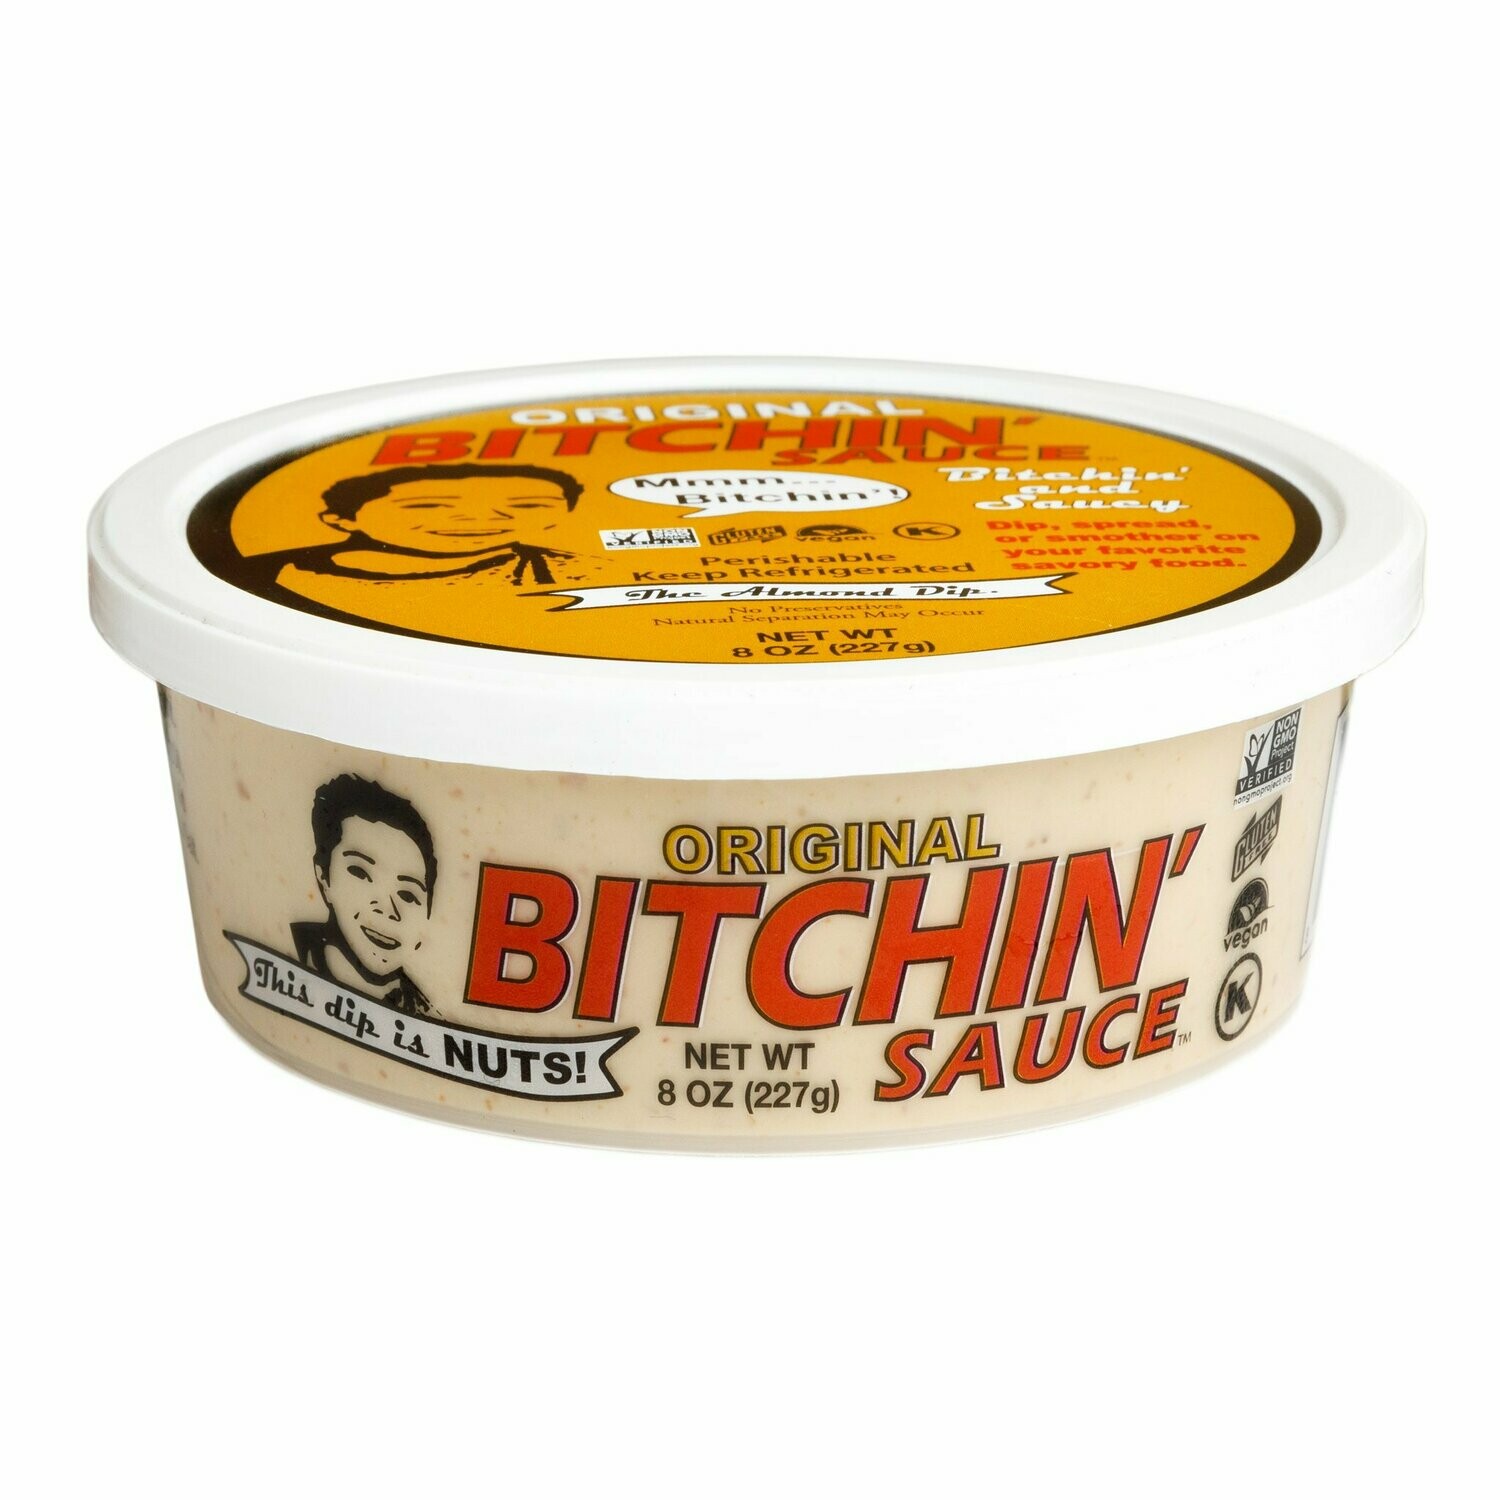 Deli / Sauce / Original Bitchin' Sauce, 8 oz